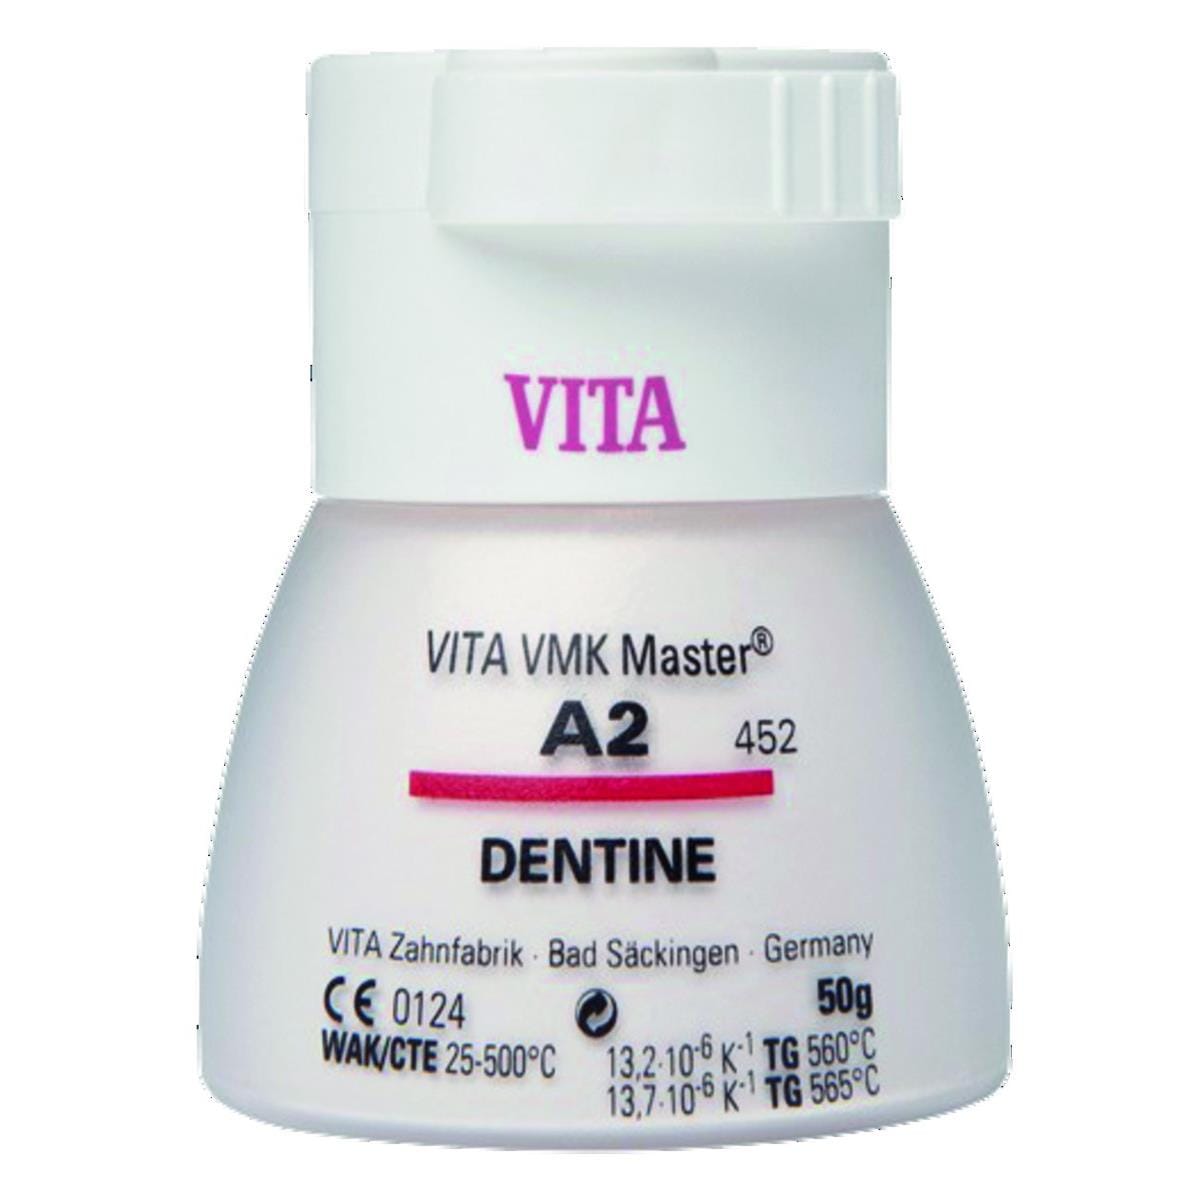 VMK Master VITA - Dentine - 4L1,5 - Le flacon de 50 g